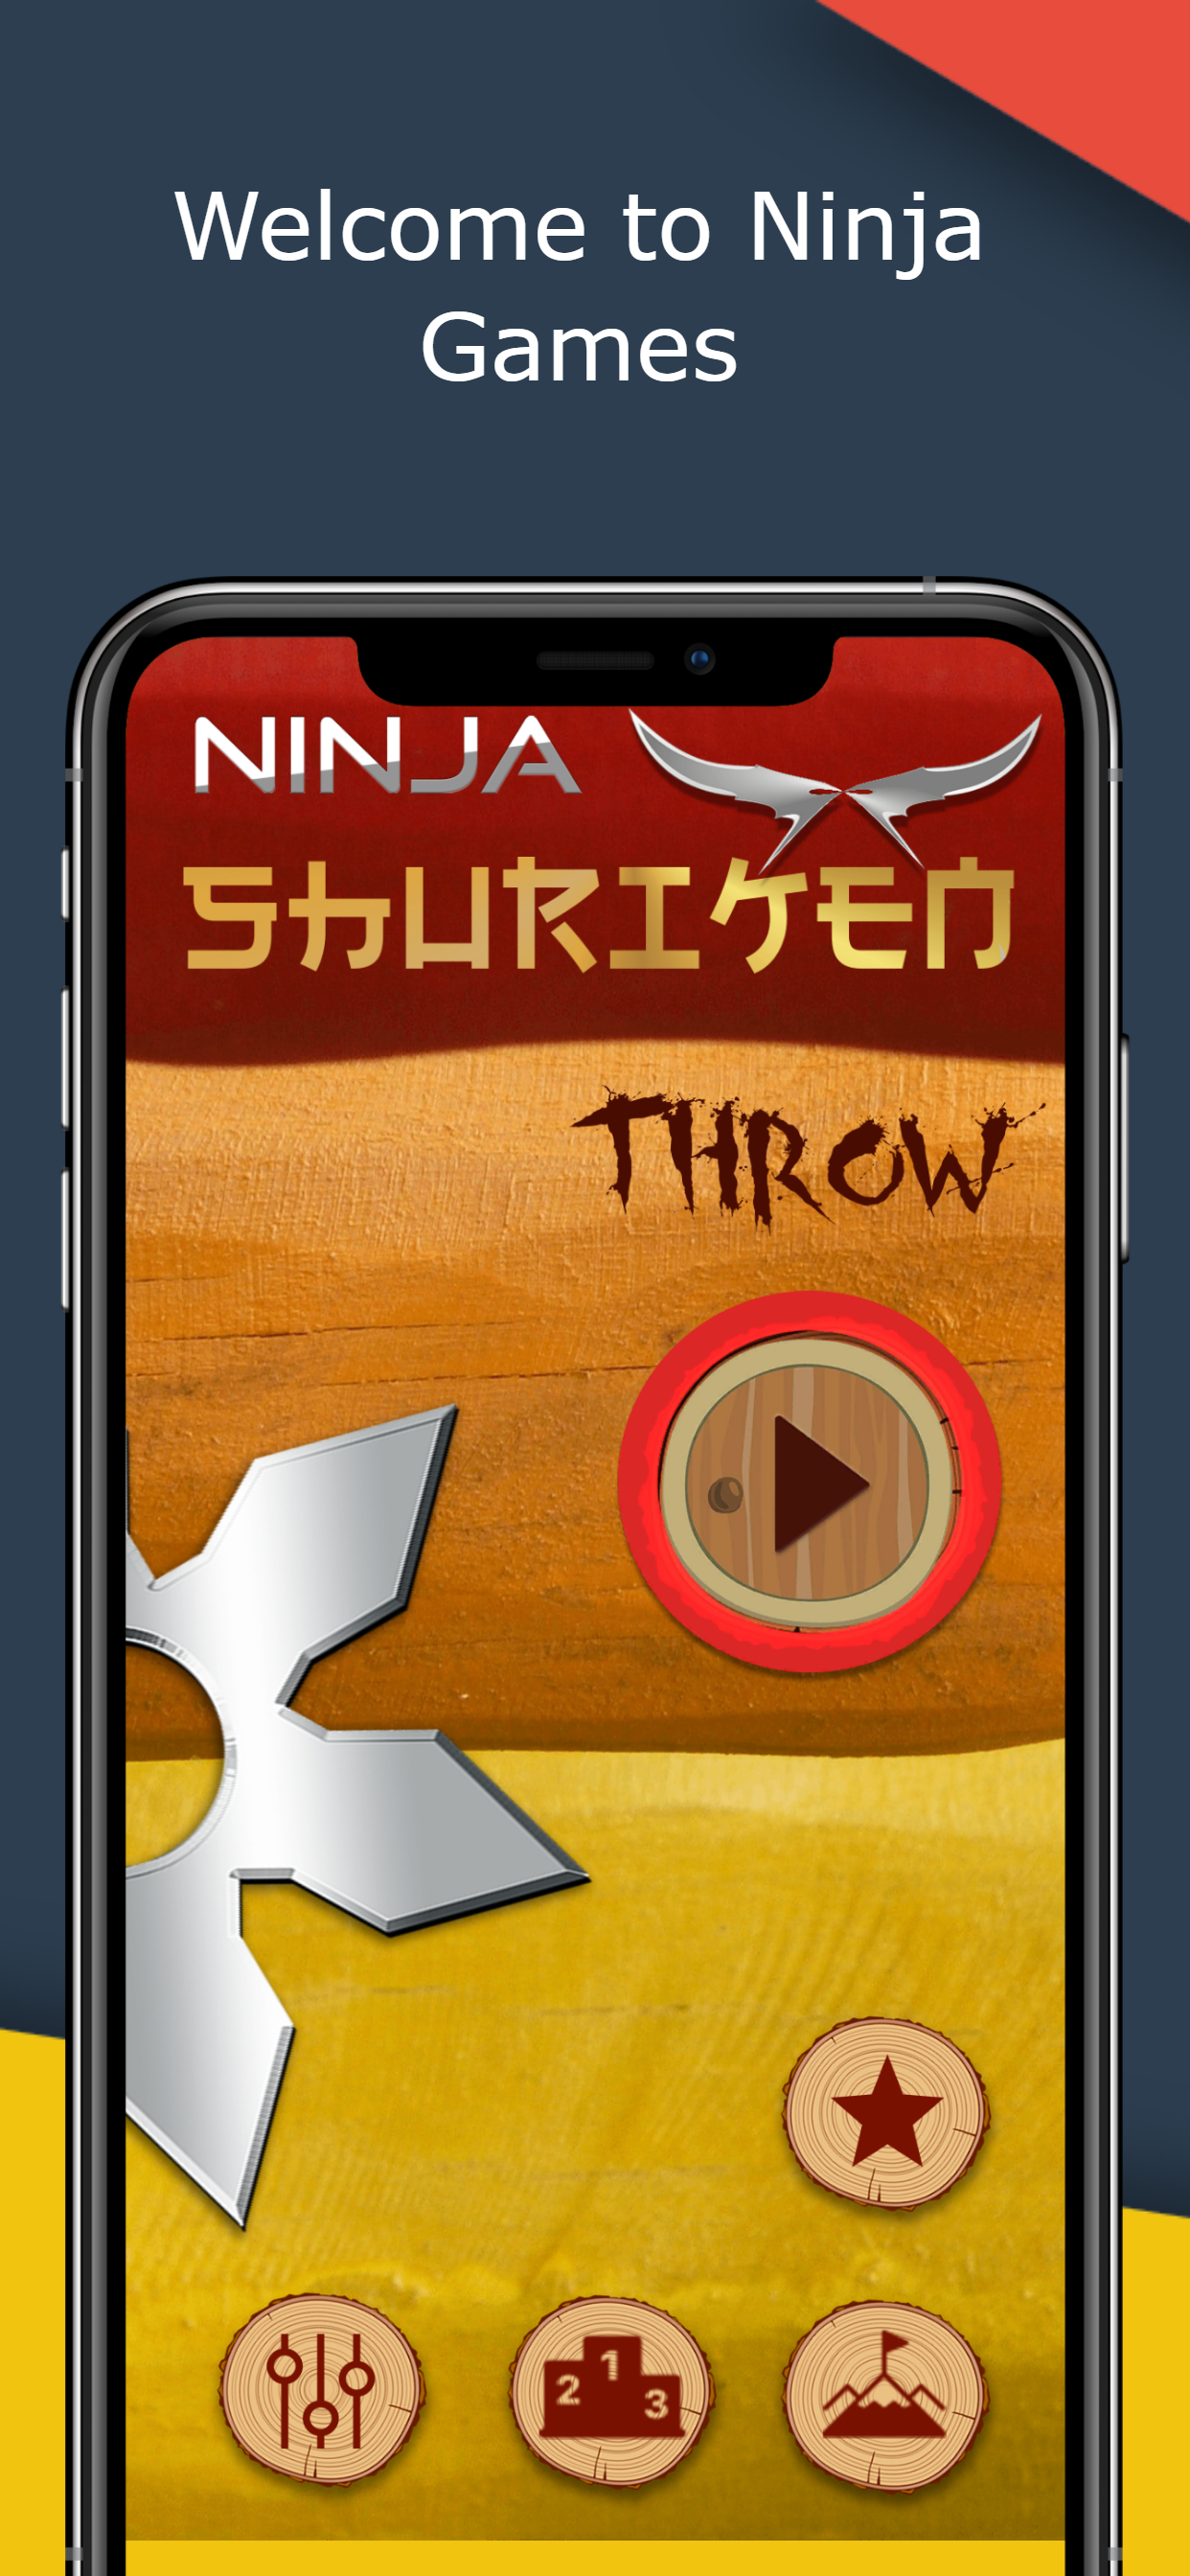 Ninja Games - Shuriken Throw